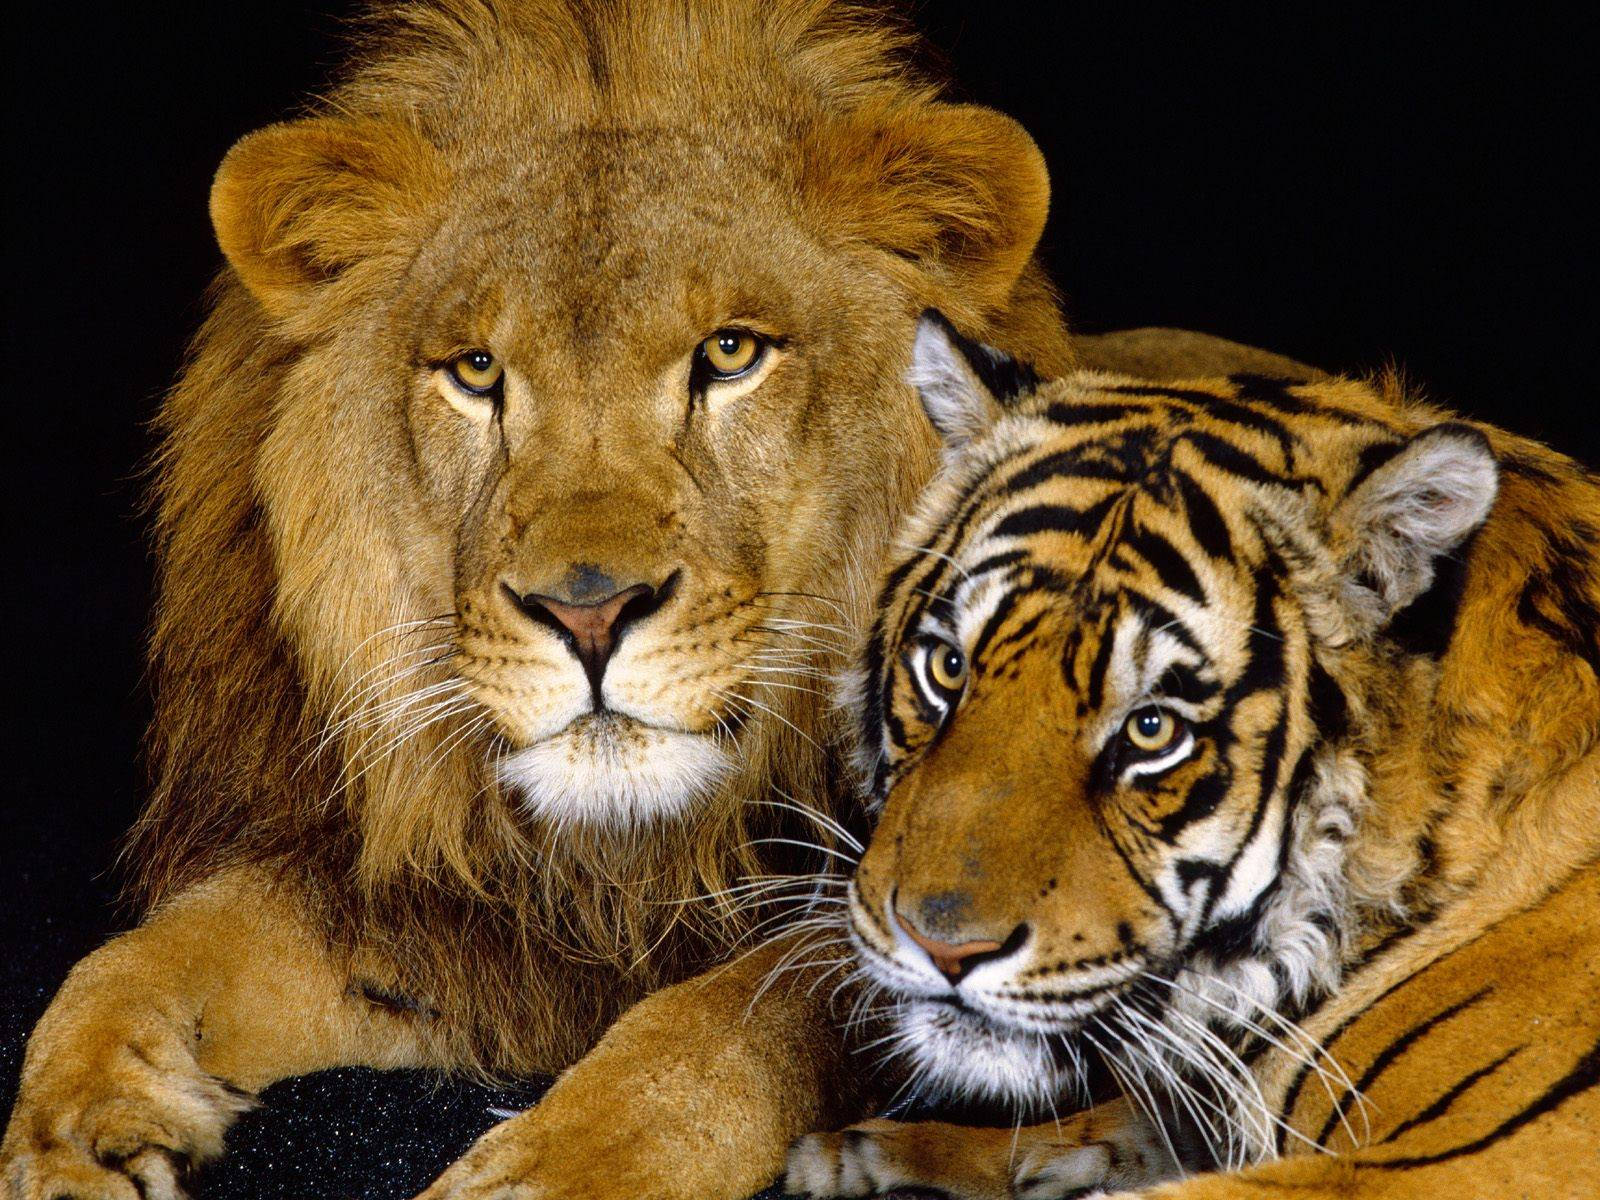 Lion And Tiger Together Wallpaper